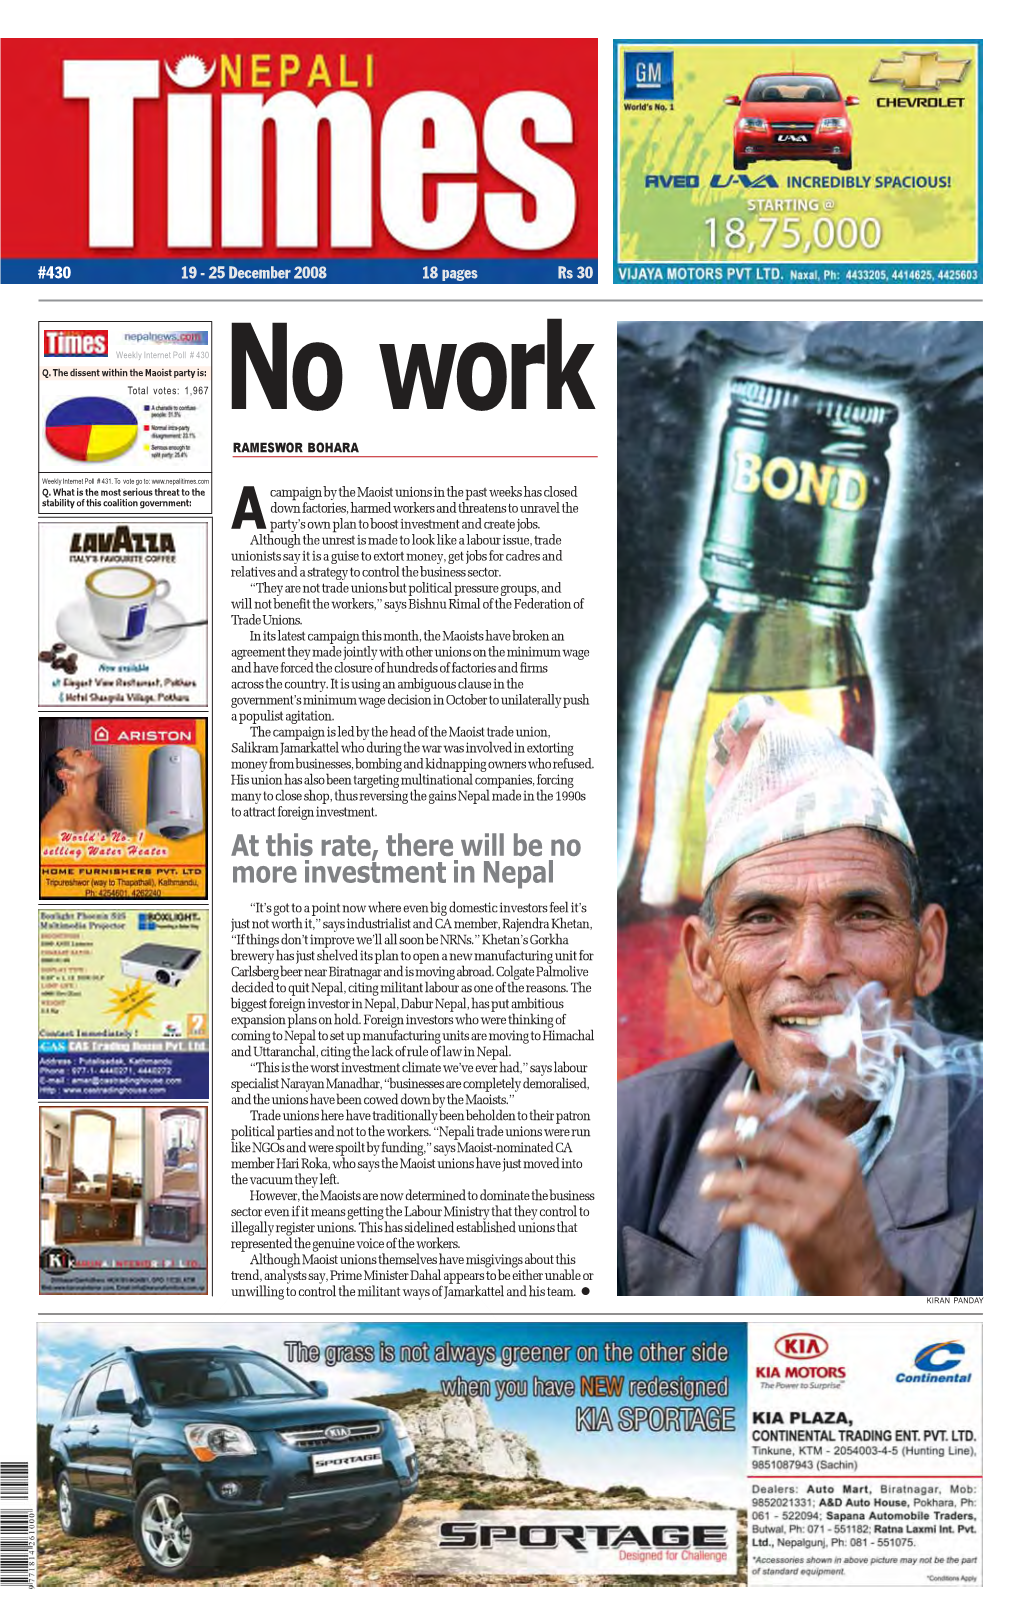 Nepali Times Welcomes Feedback